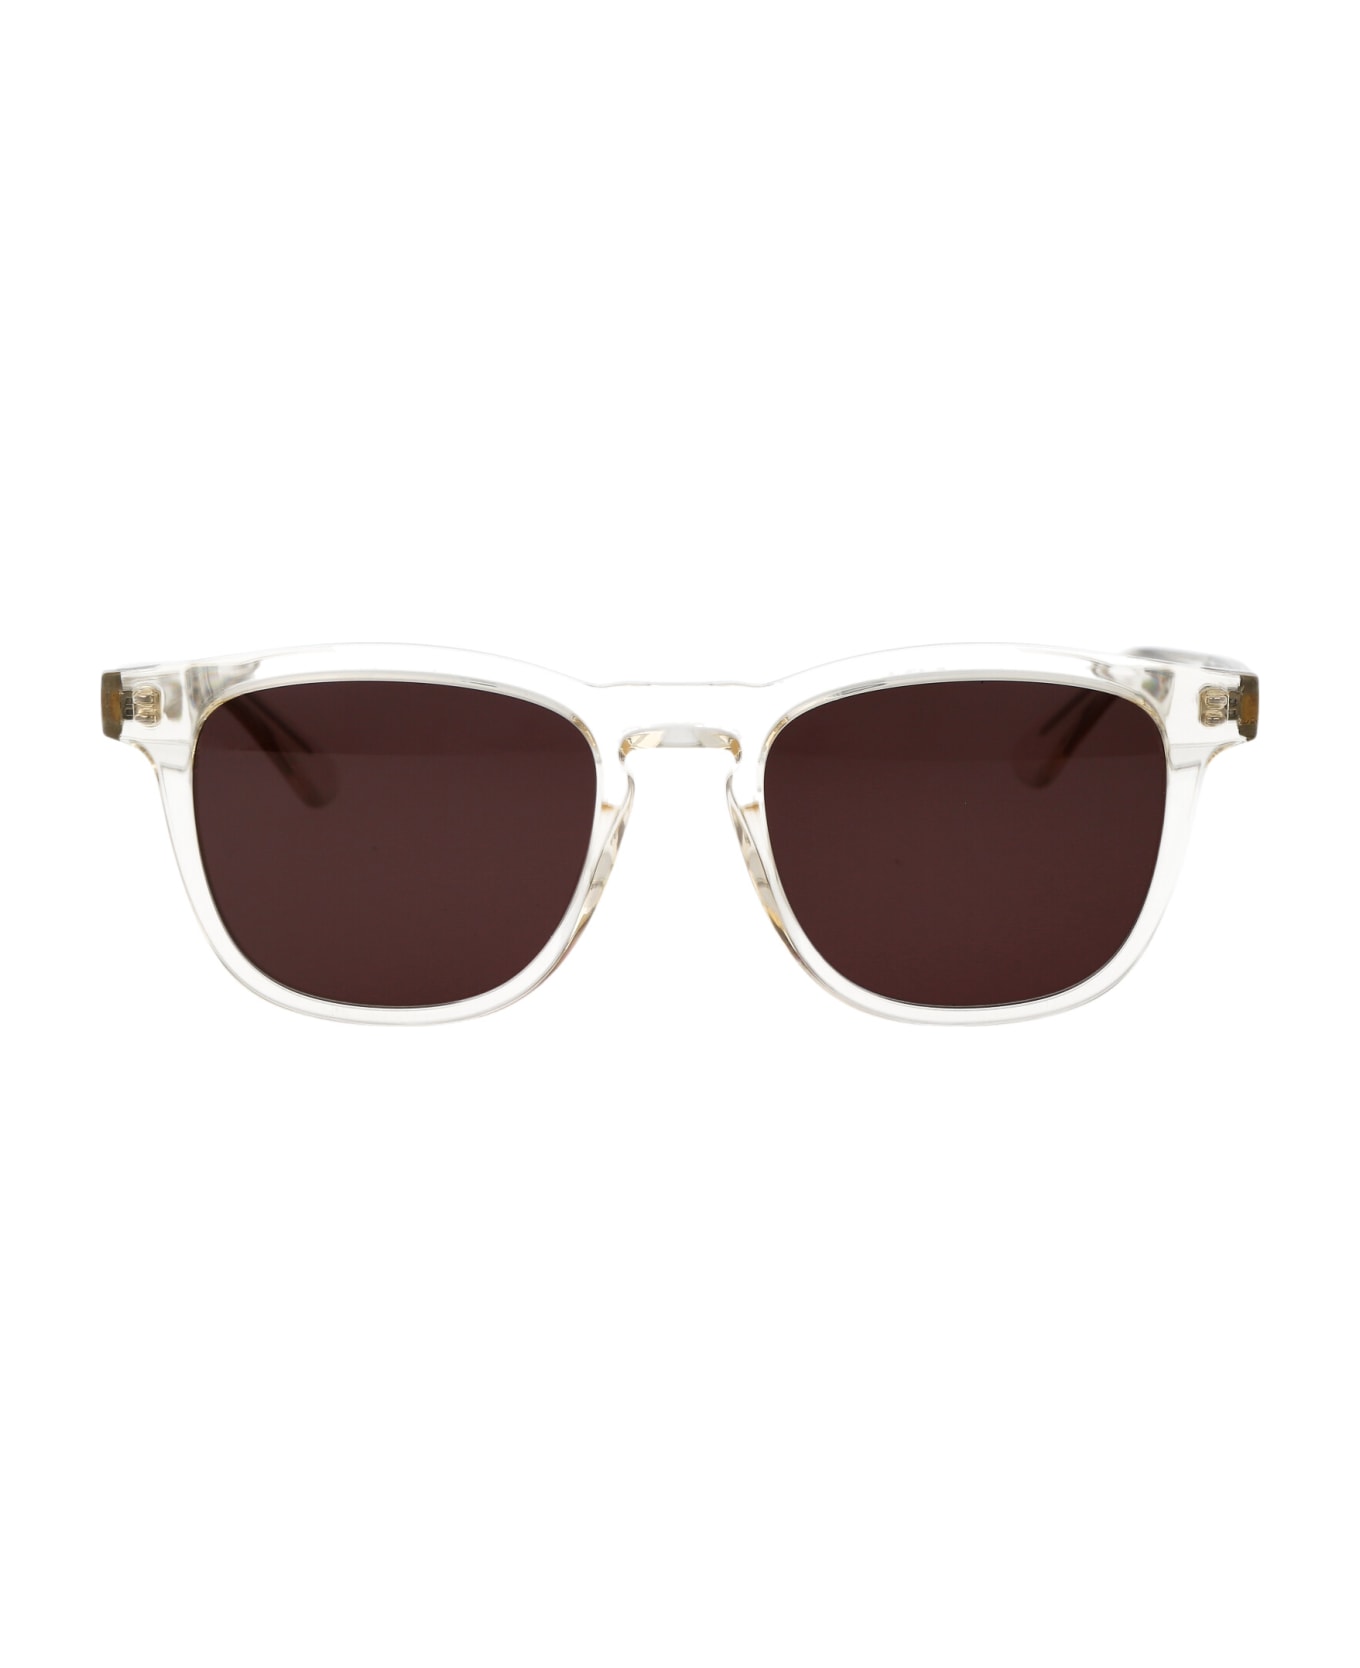 Calvin Klein Ck23505s Sunglasses - 272 SAND